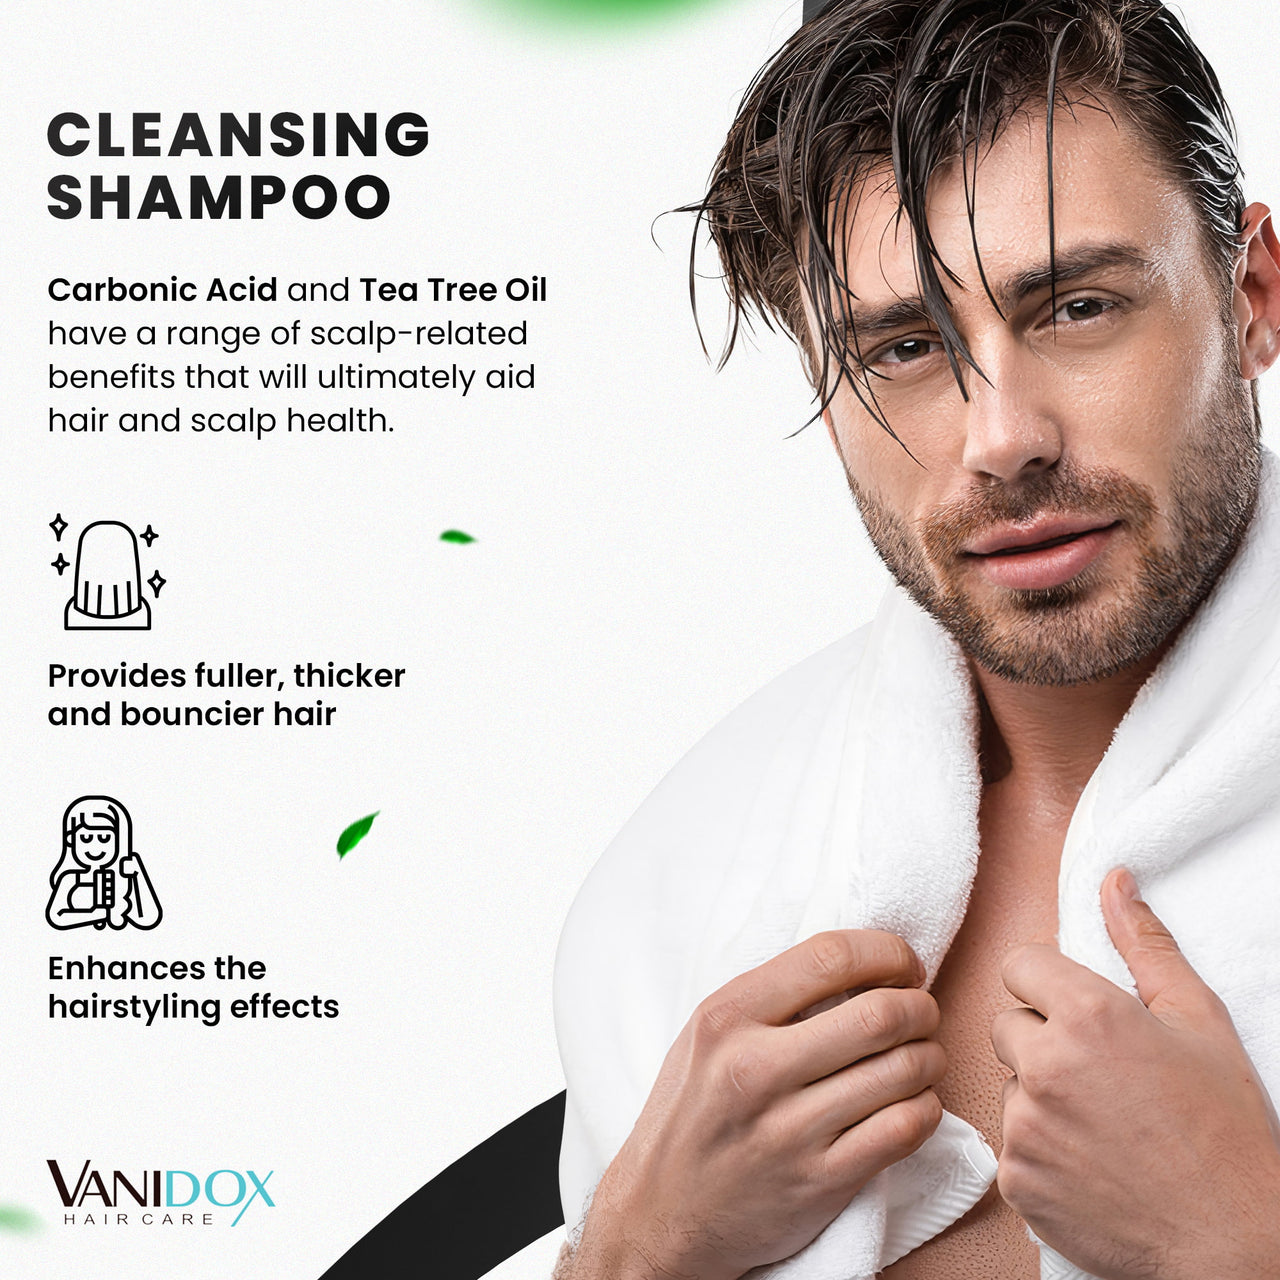 Carbonic Acid Shampoo | Revitalizes Hair Growth | Scalp Soothing Formula | Washes away Dandruff